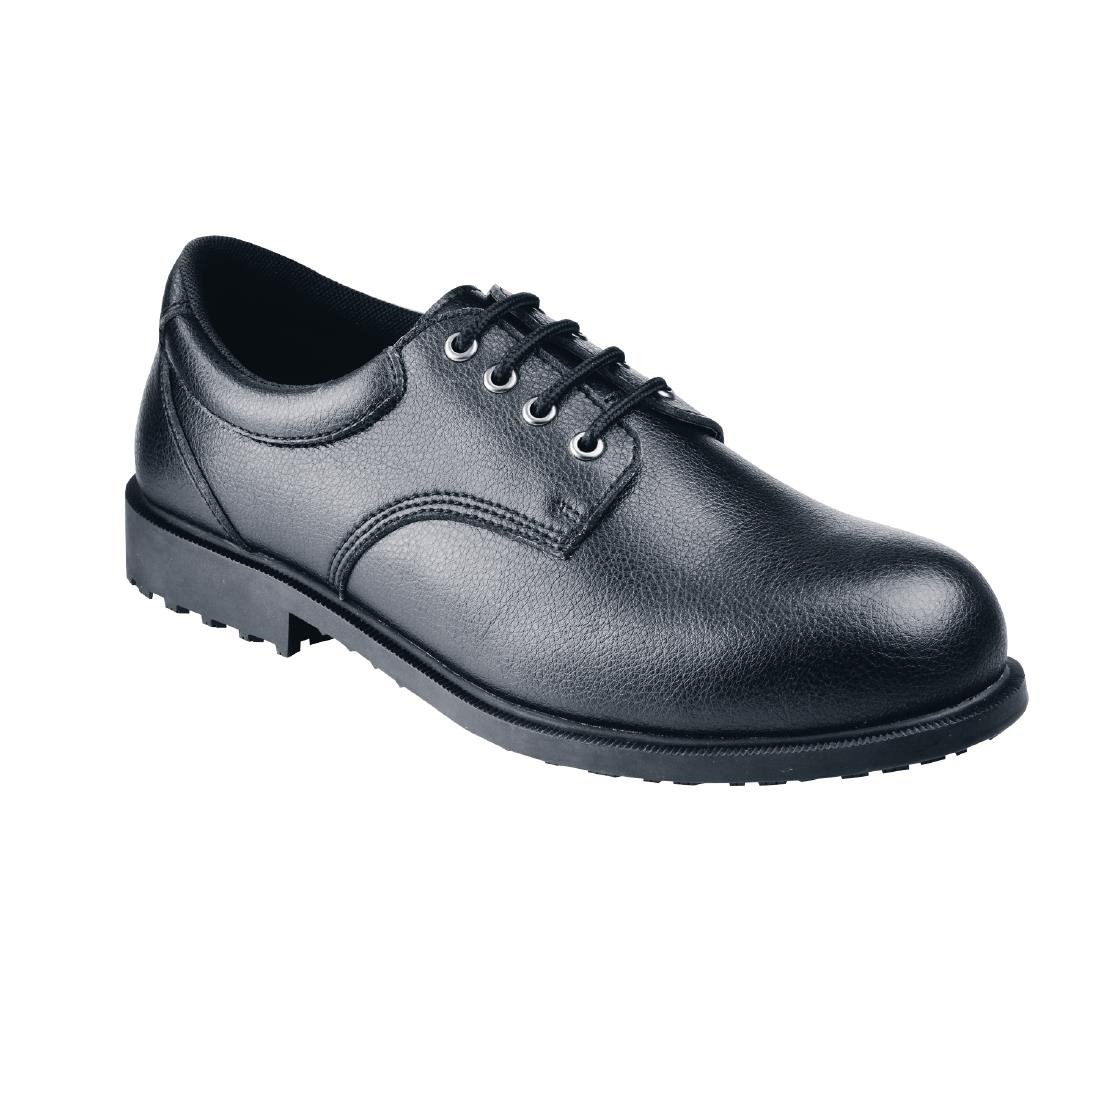 BB611-47 Shoes for Crews Cambridge Steel Toe Dress Shoe Size 47